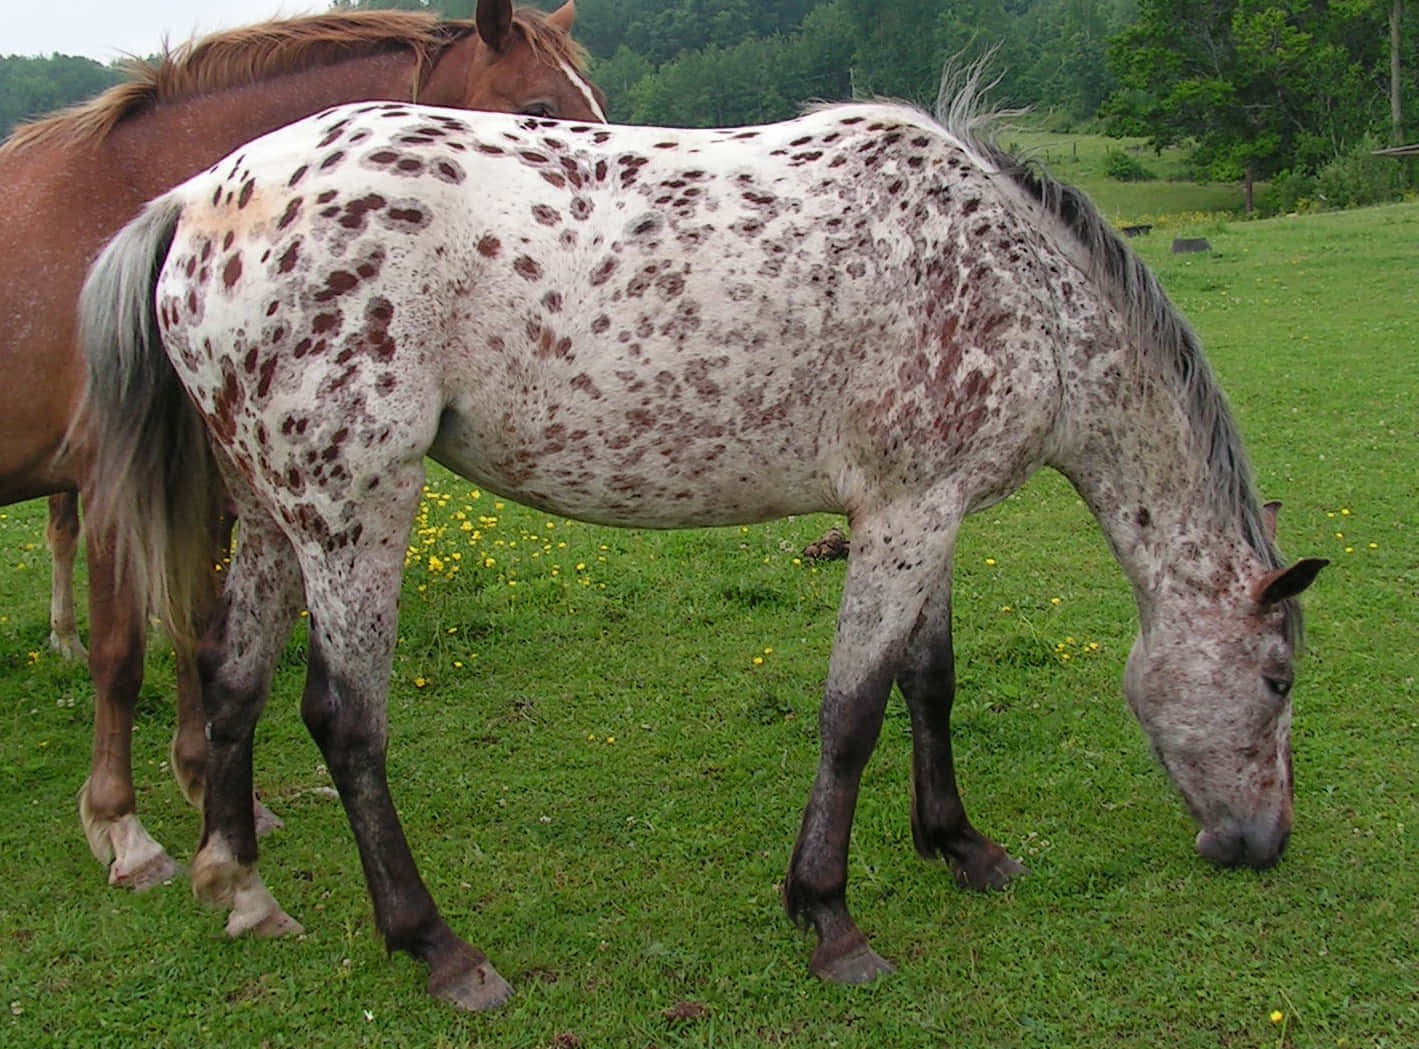 An Appaloosa Horse stands gracefully in an open field